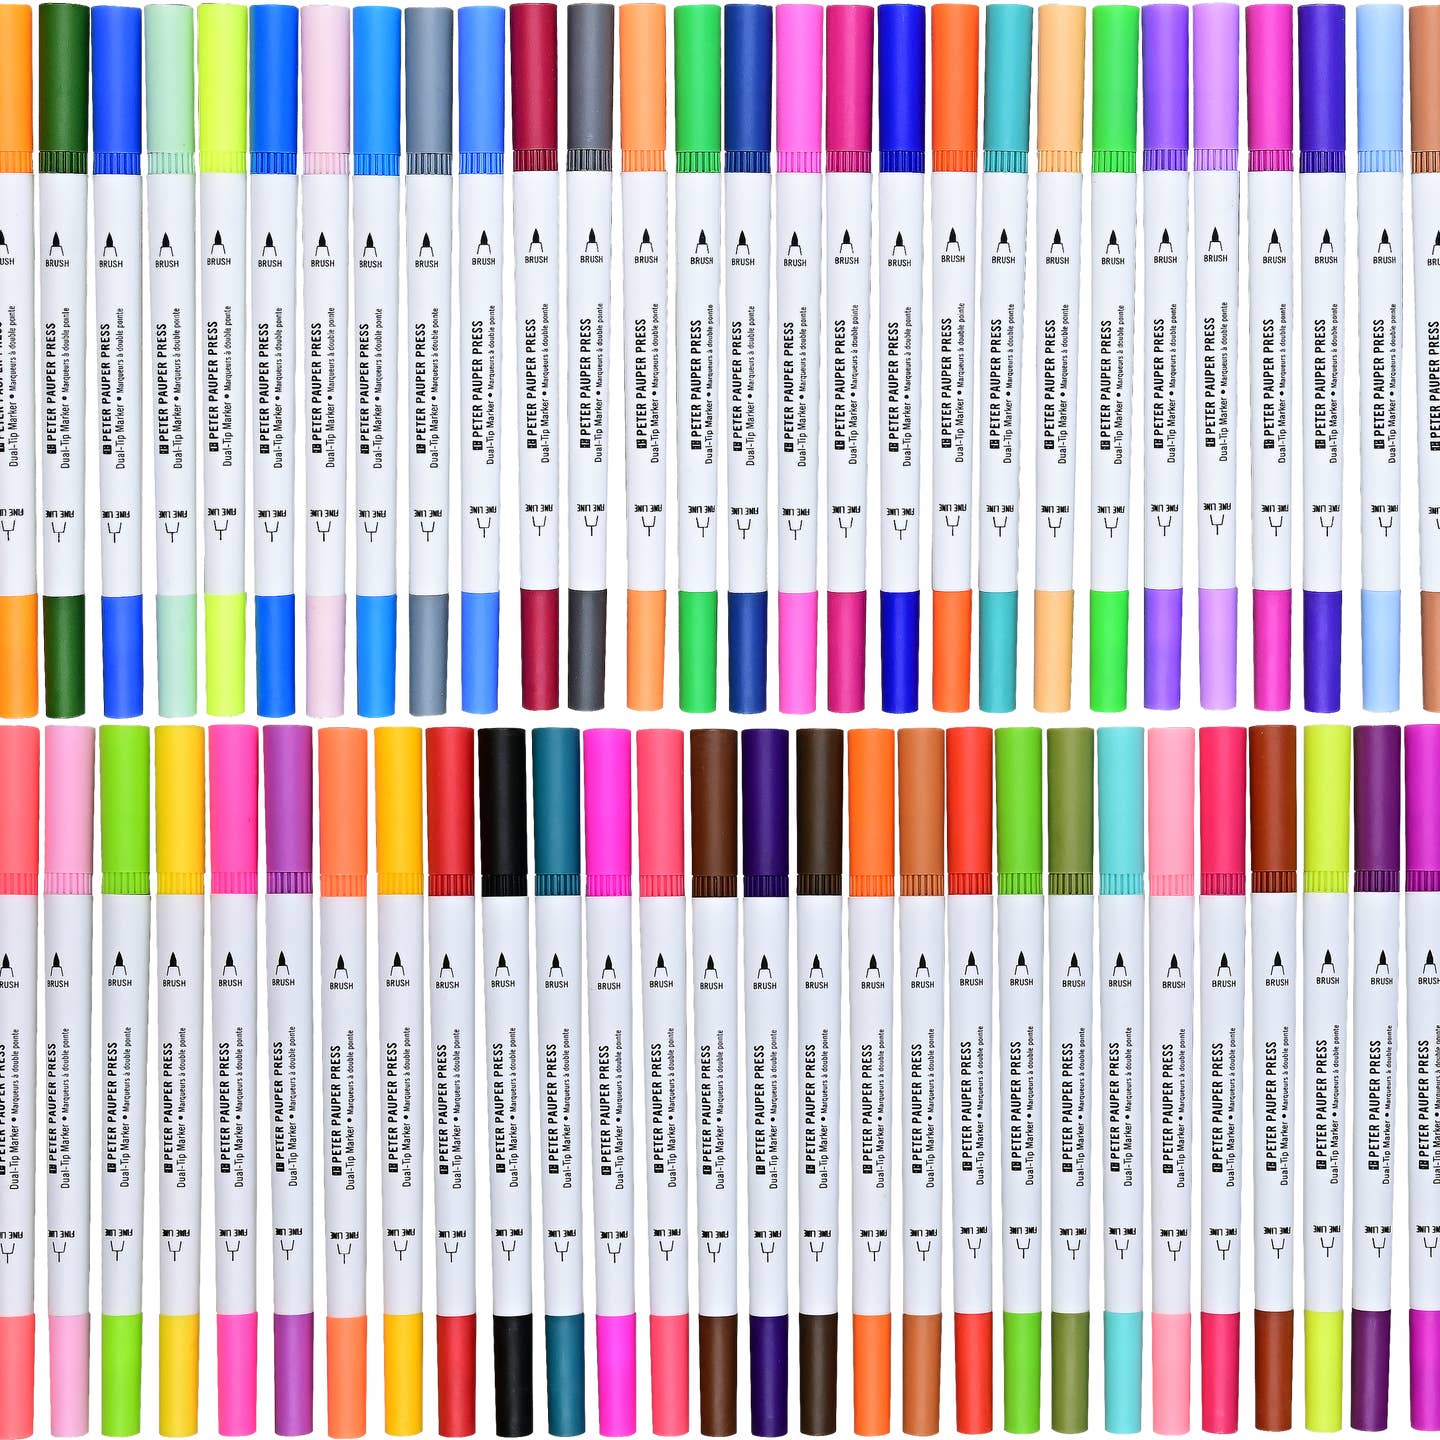 Studio Series Dual-Tip Coloring Markers (set of 60)